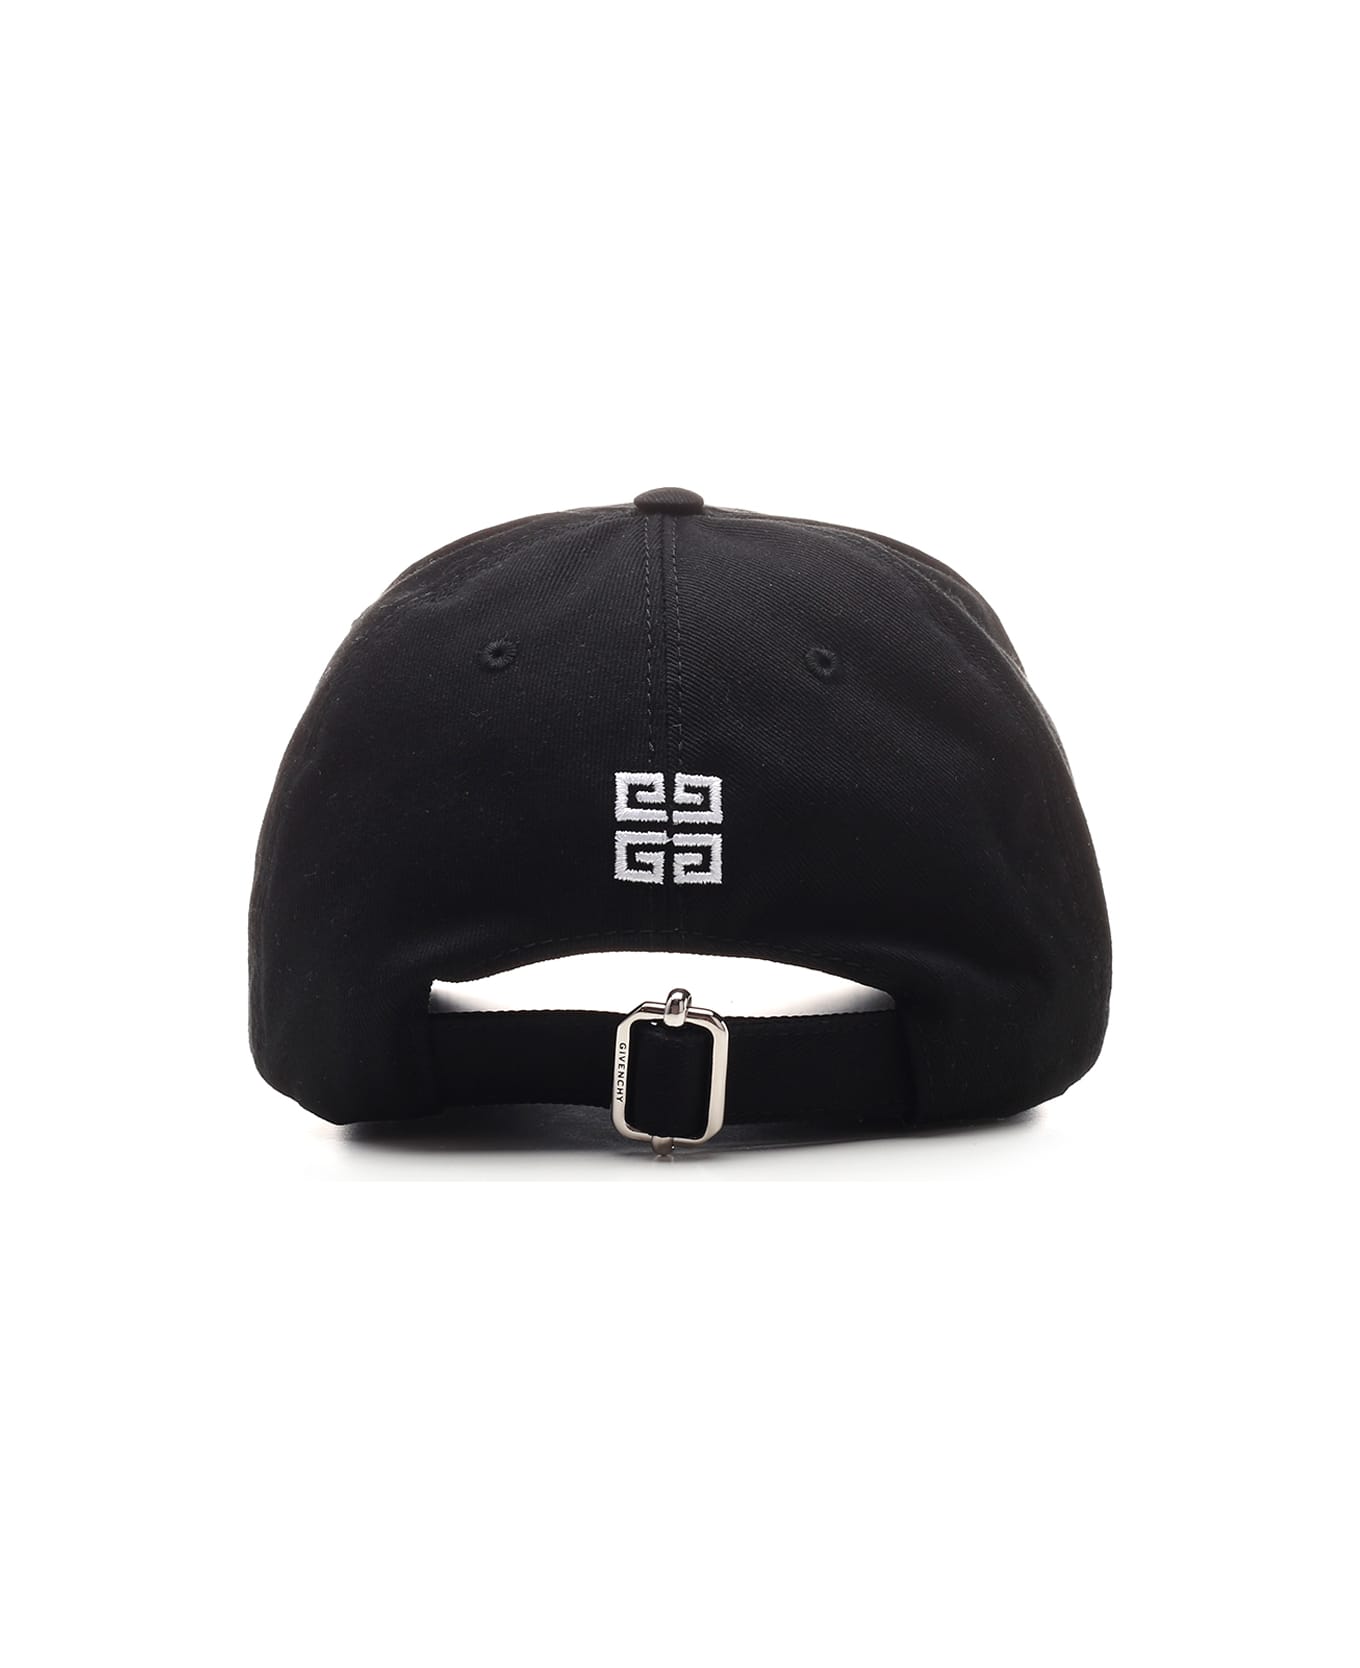 Givenchy Black '4g' Baseball Cap - Black 帽子